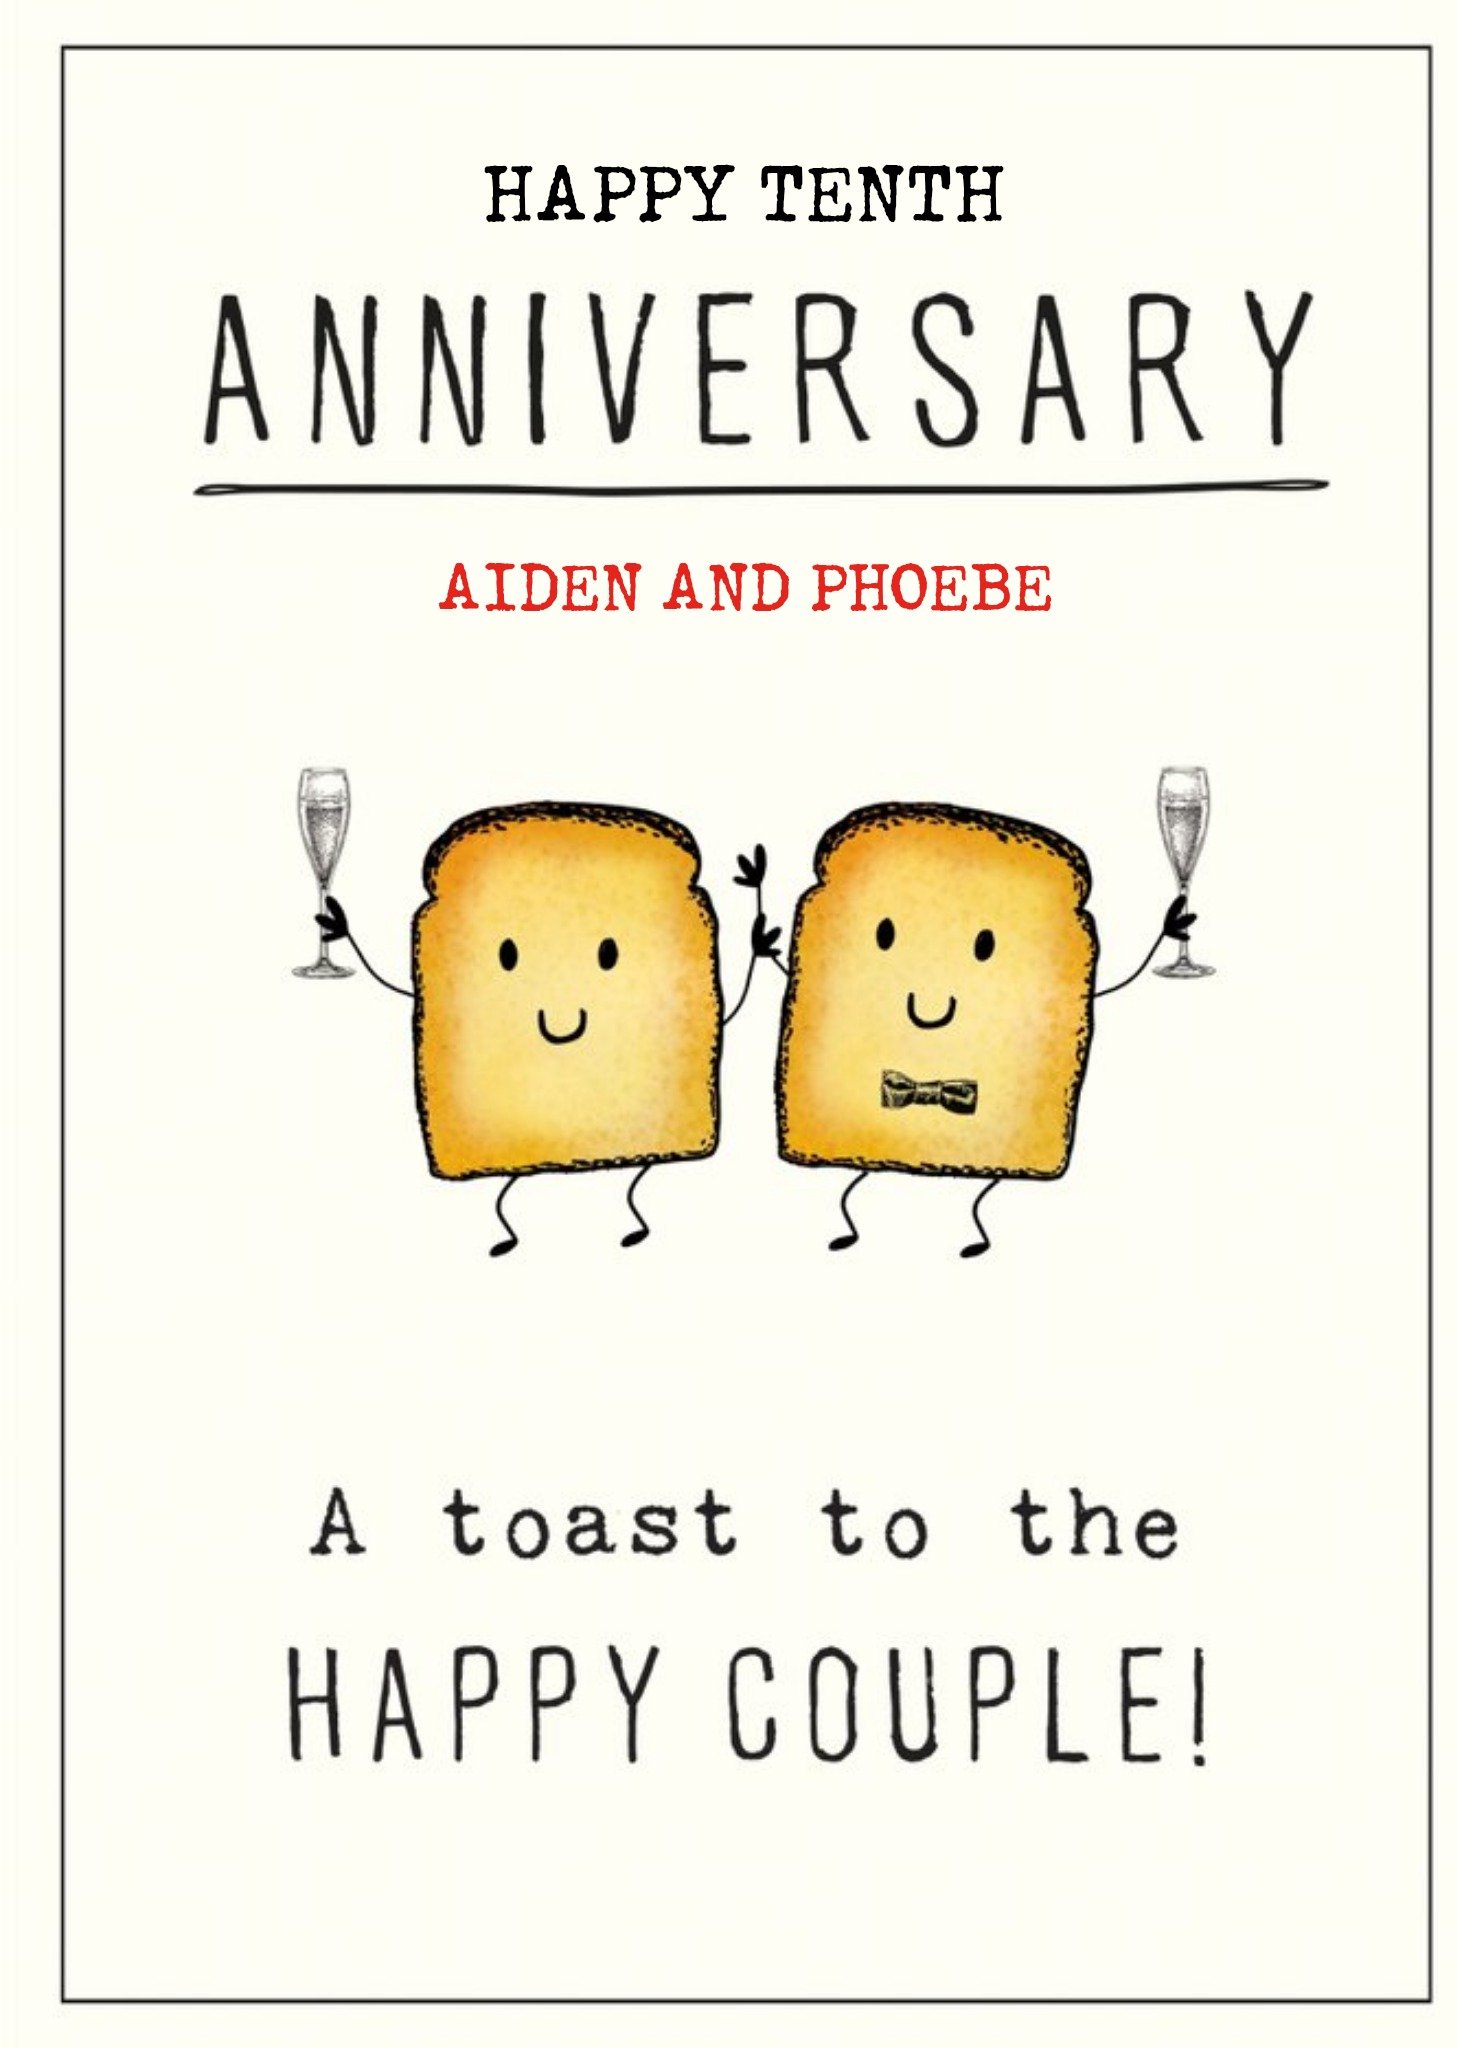 Moonpig Cute Illustrative Champagne Toast Anniversary Pun Card, Large